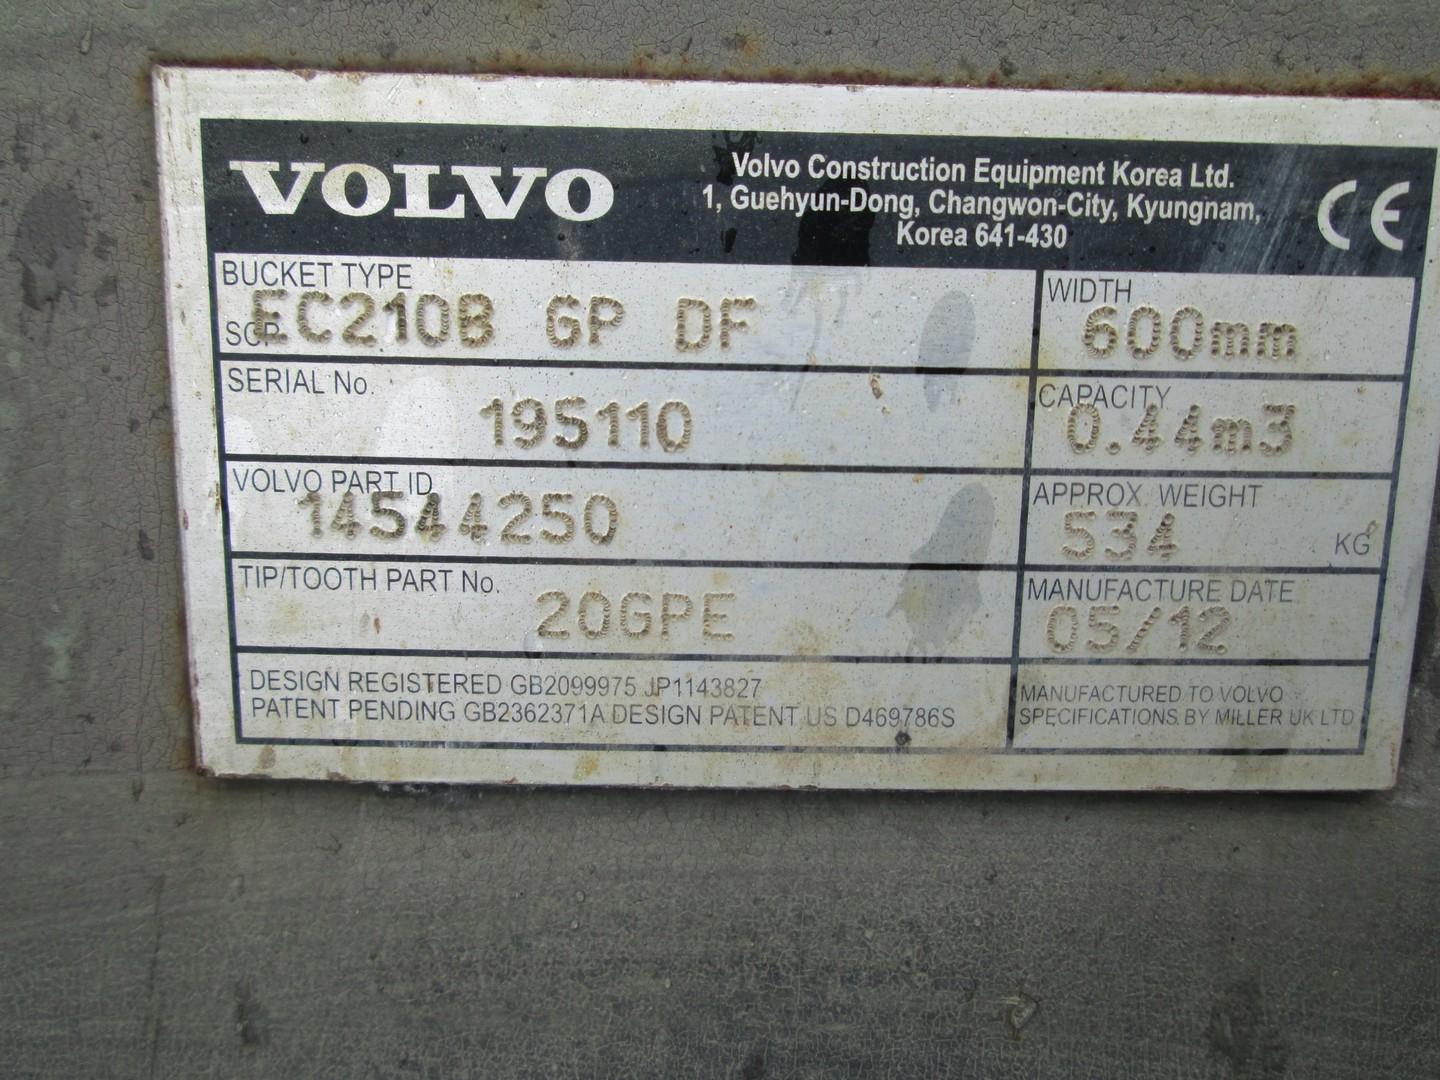 Volvo 24" Excavator Bucket